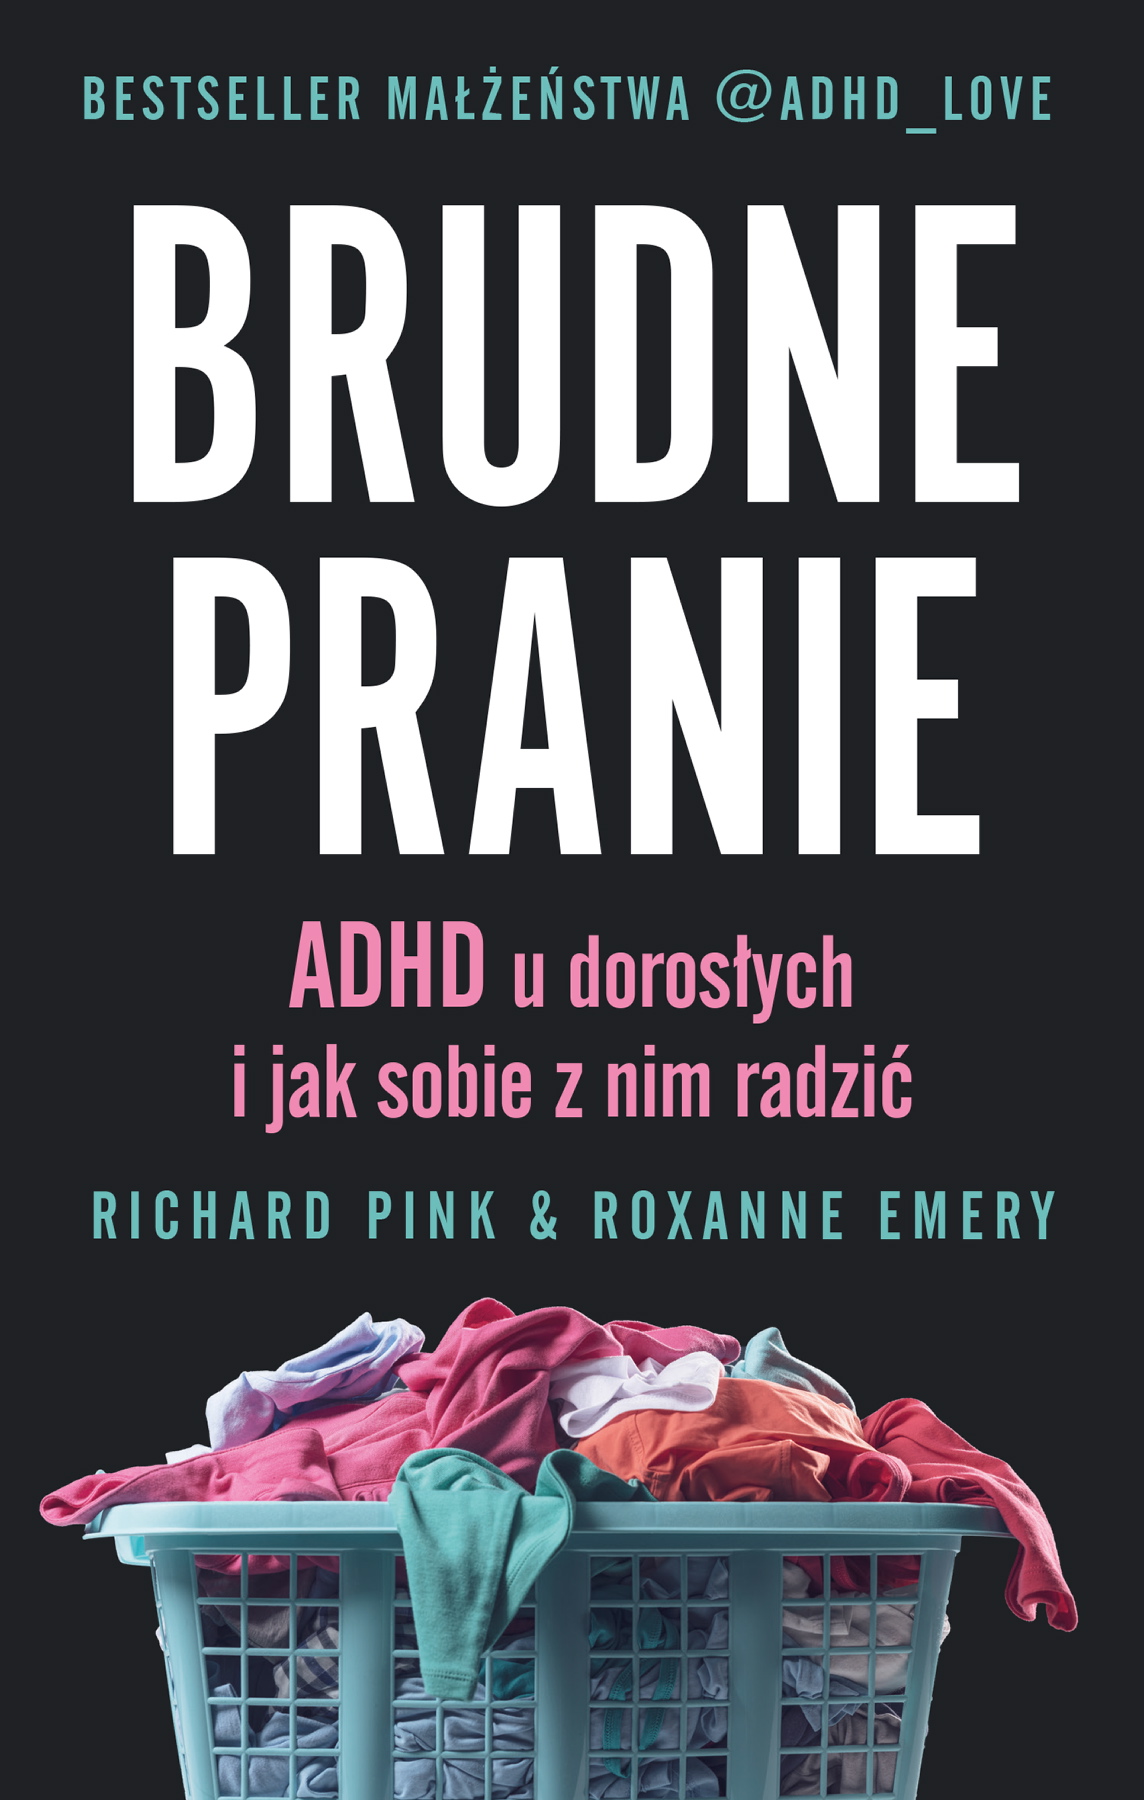 Richard Pink & Roxanne Emery - 